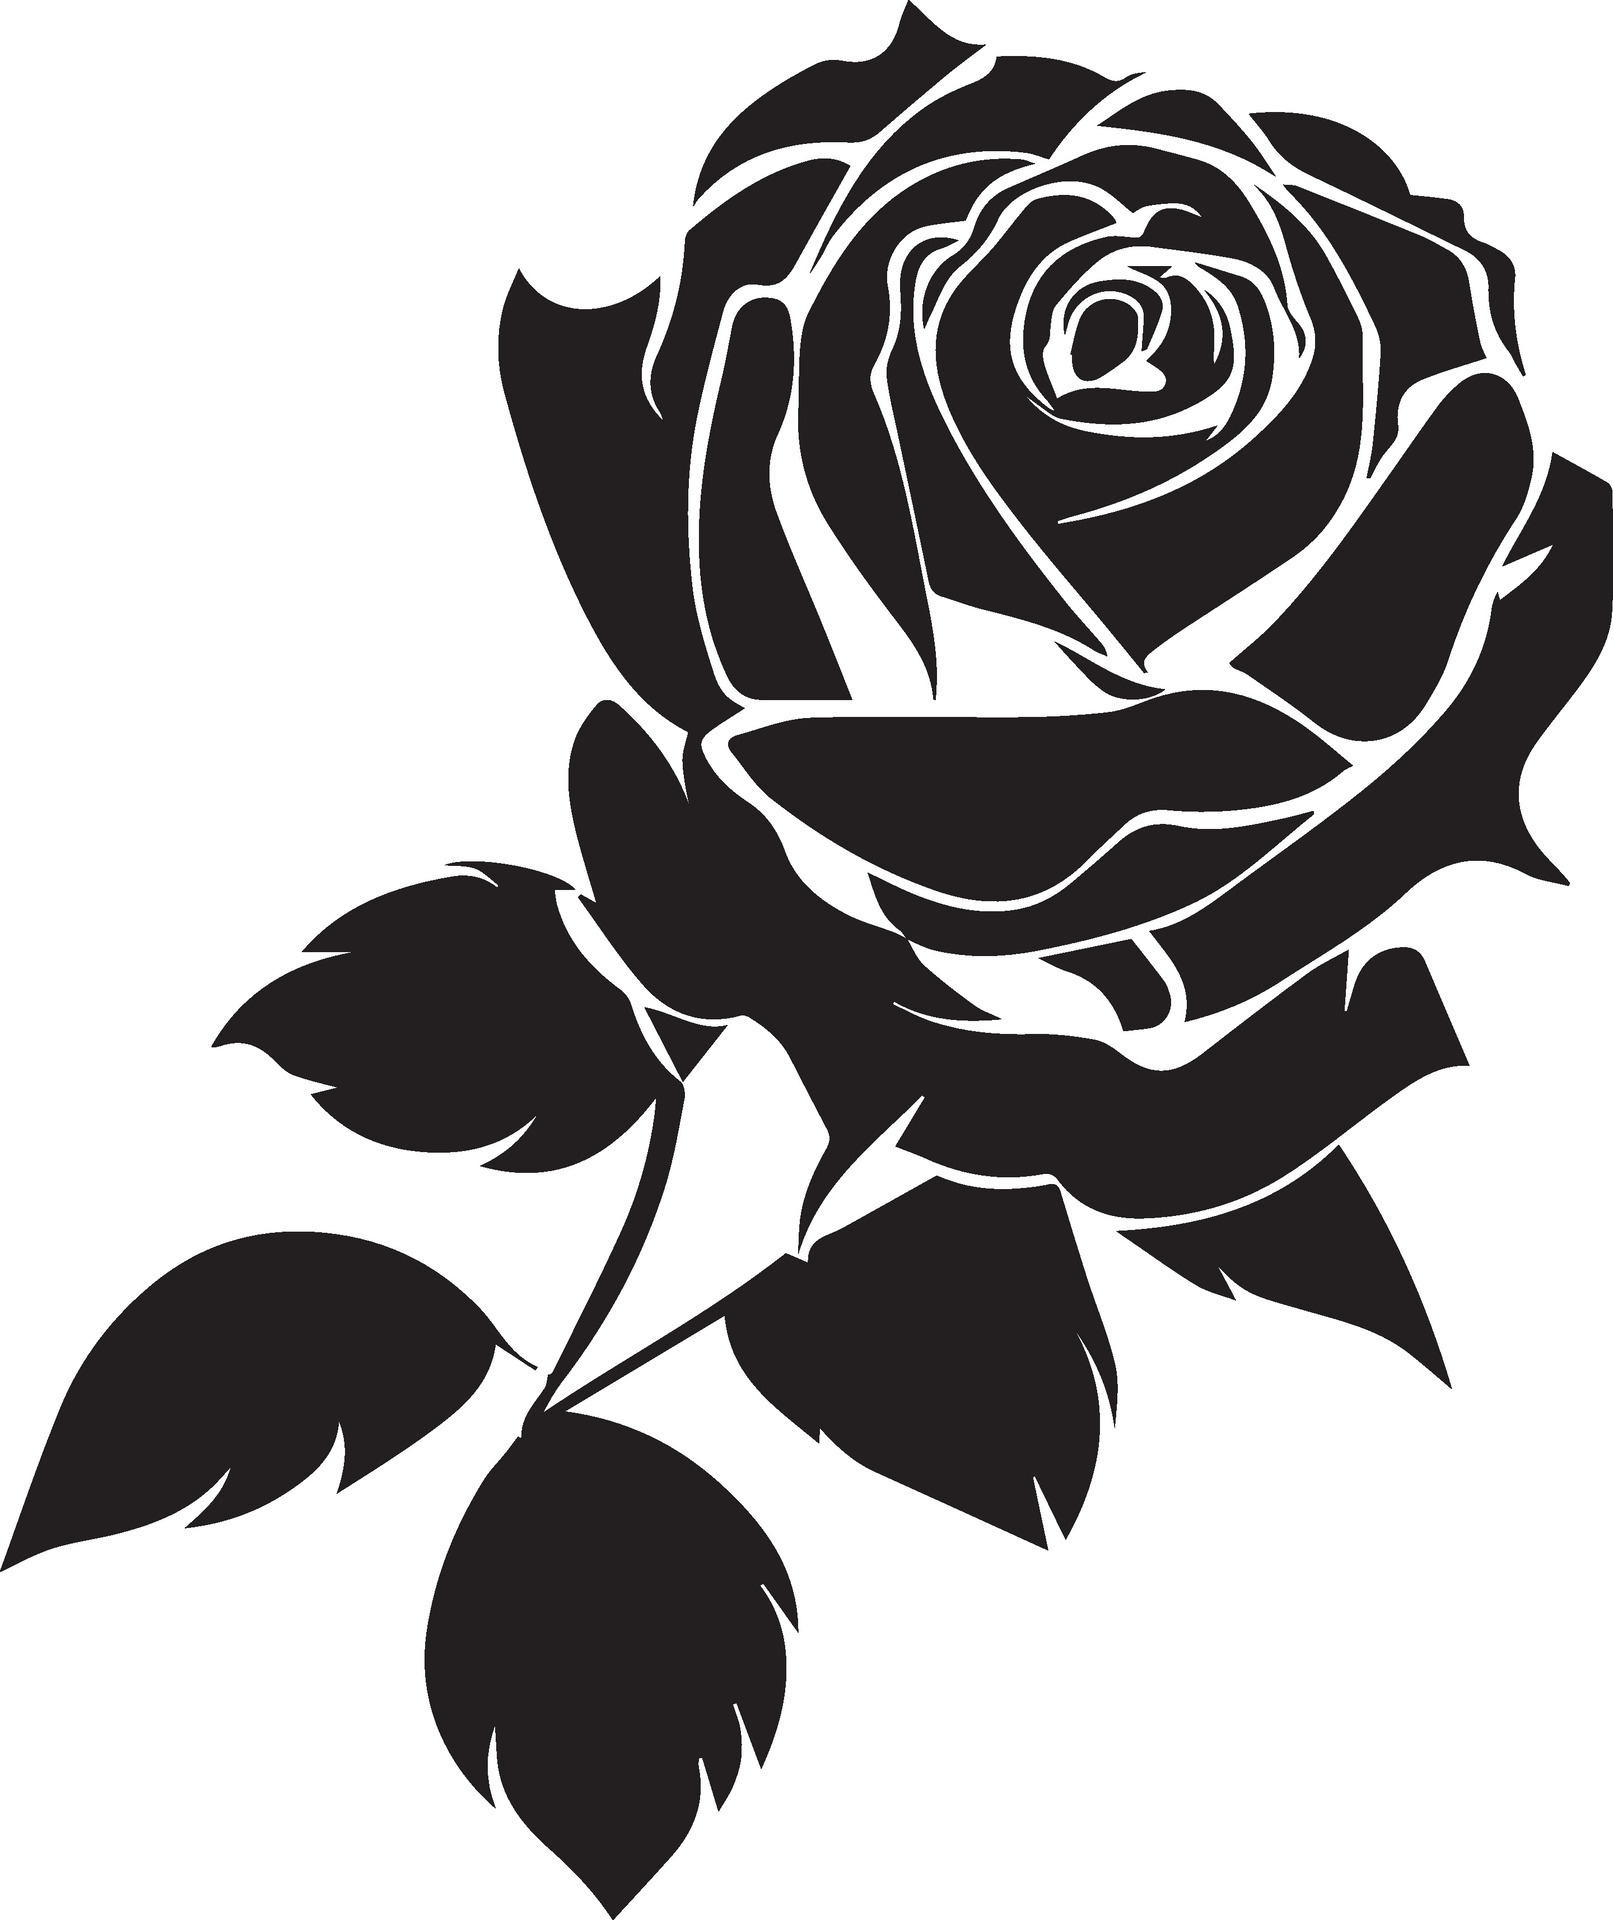 Rose Vector Design Silhouette illustration black color 24888746 Vector ...